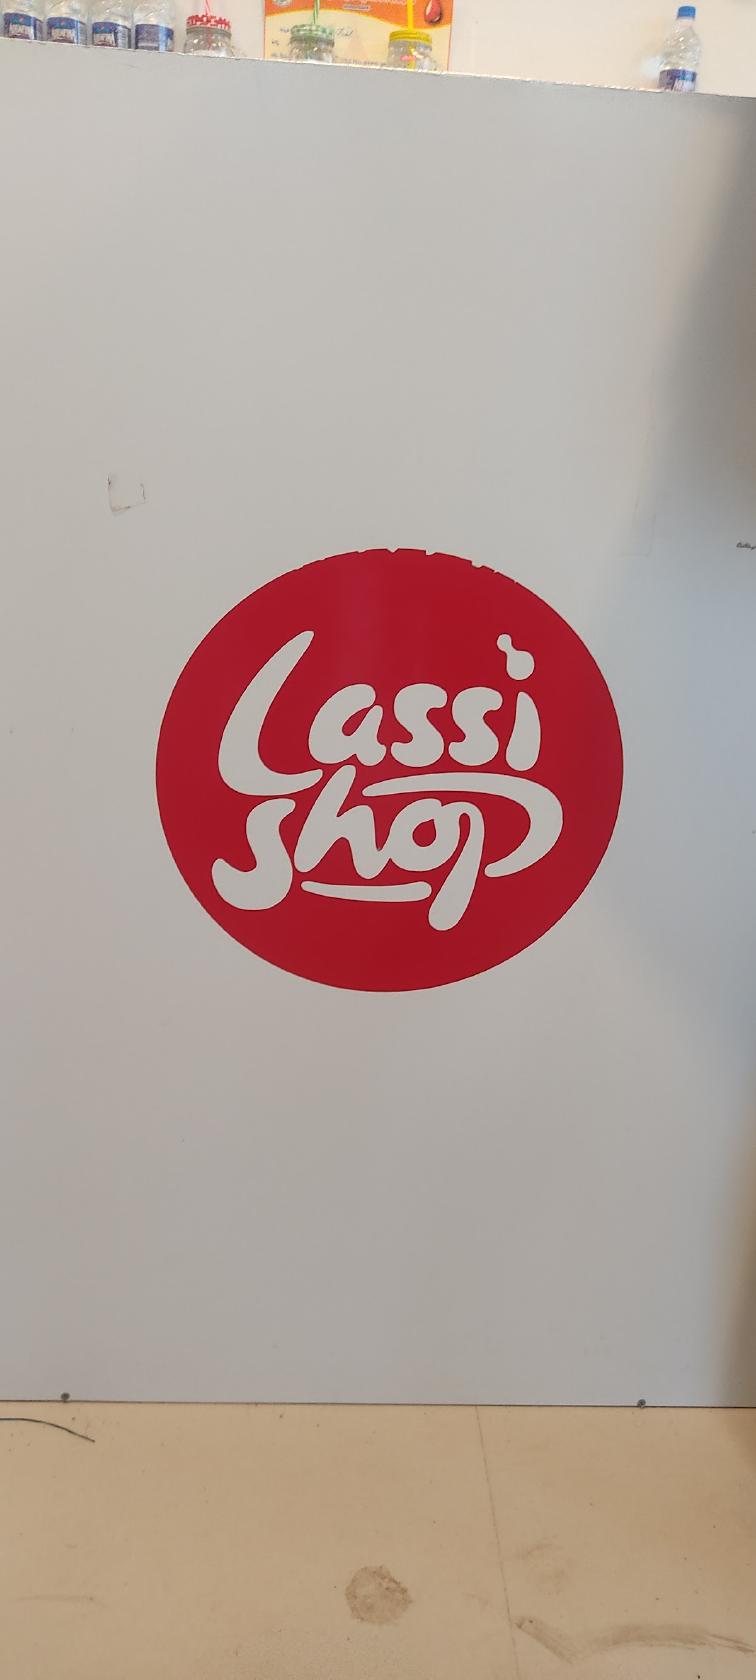 Lassi shop franchise - LASSI SHOP - KORAMANGALA - BANGALORE Customer Review  - mouthshut.com